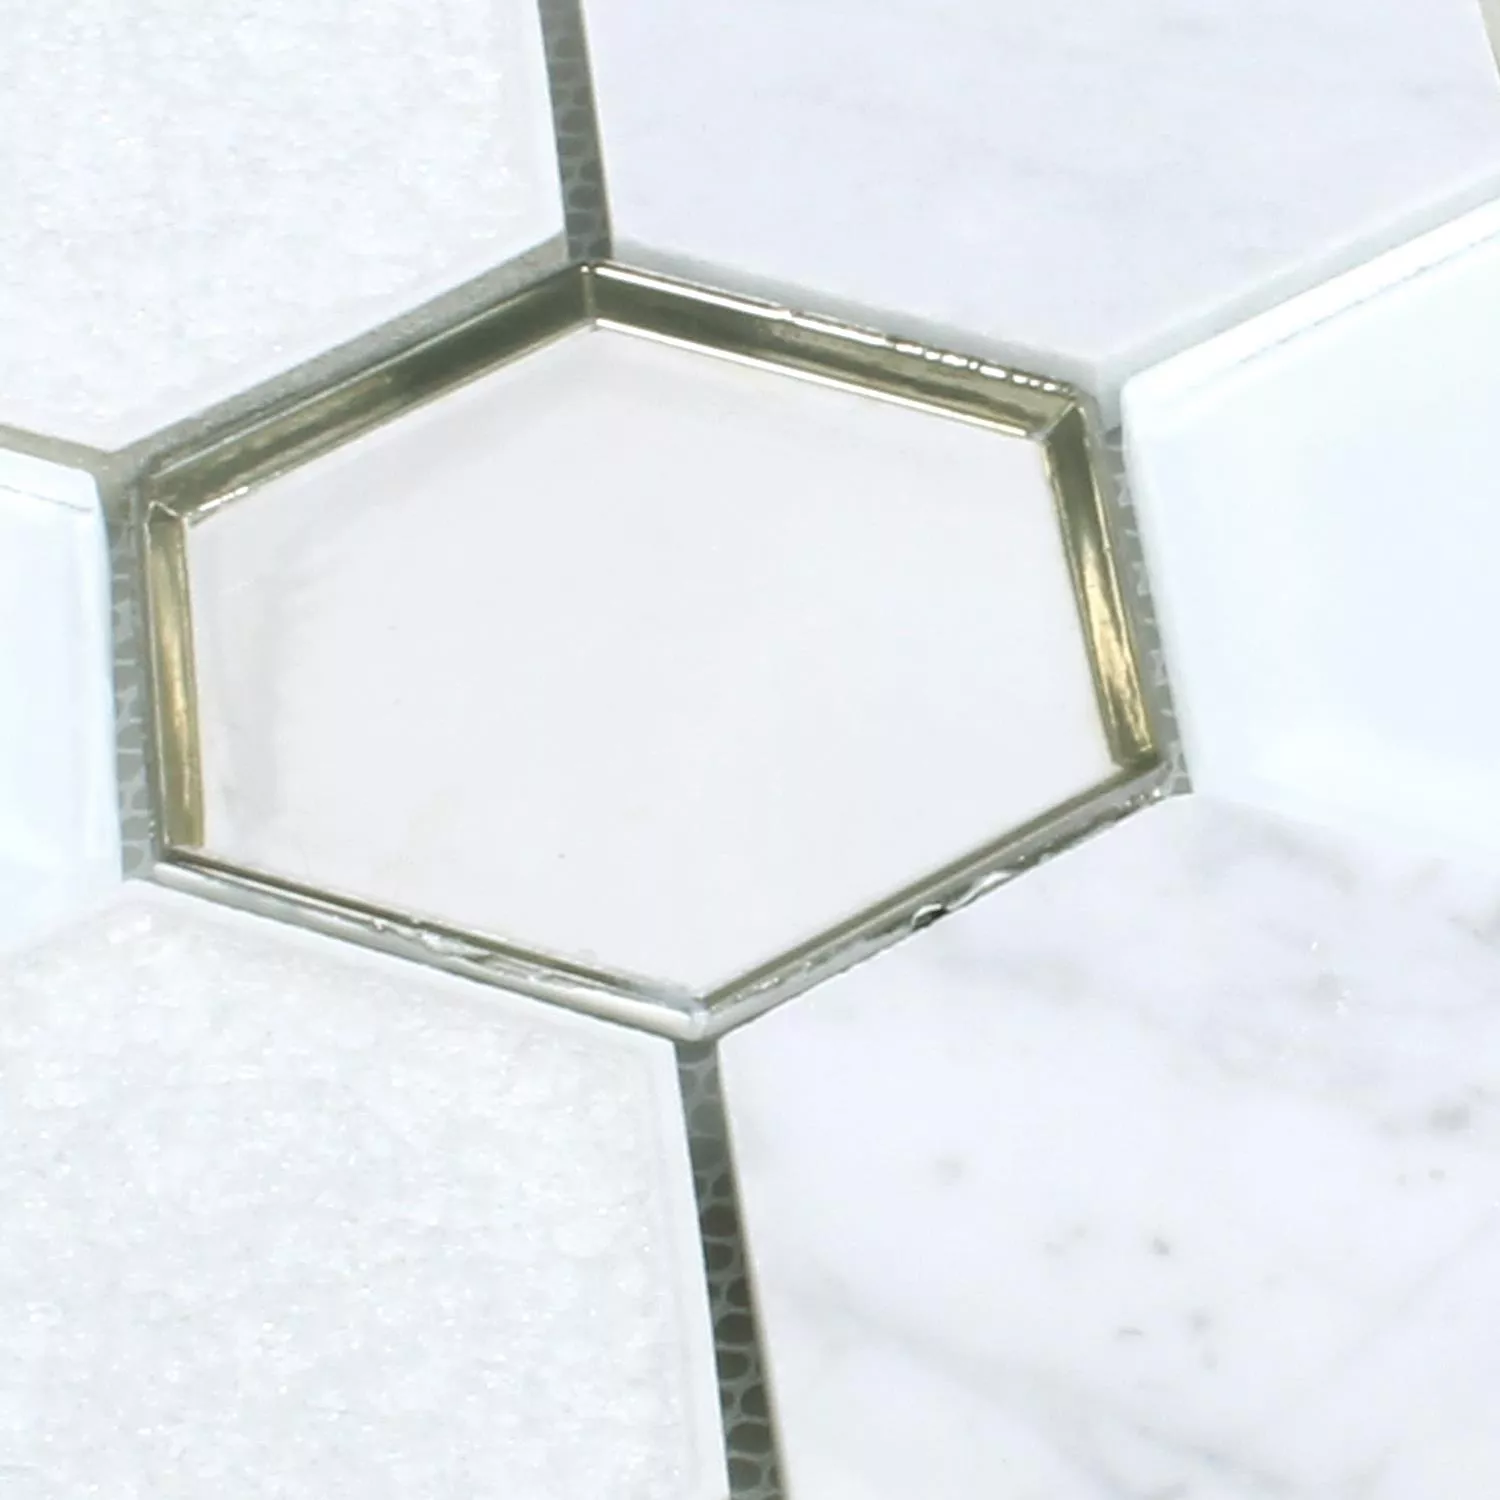 Mosaico Concrete Vetro Pietra Naturale 3D Bianco